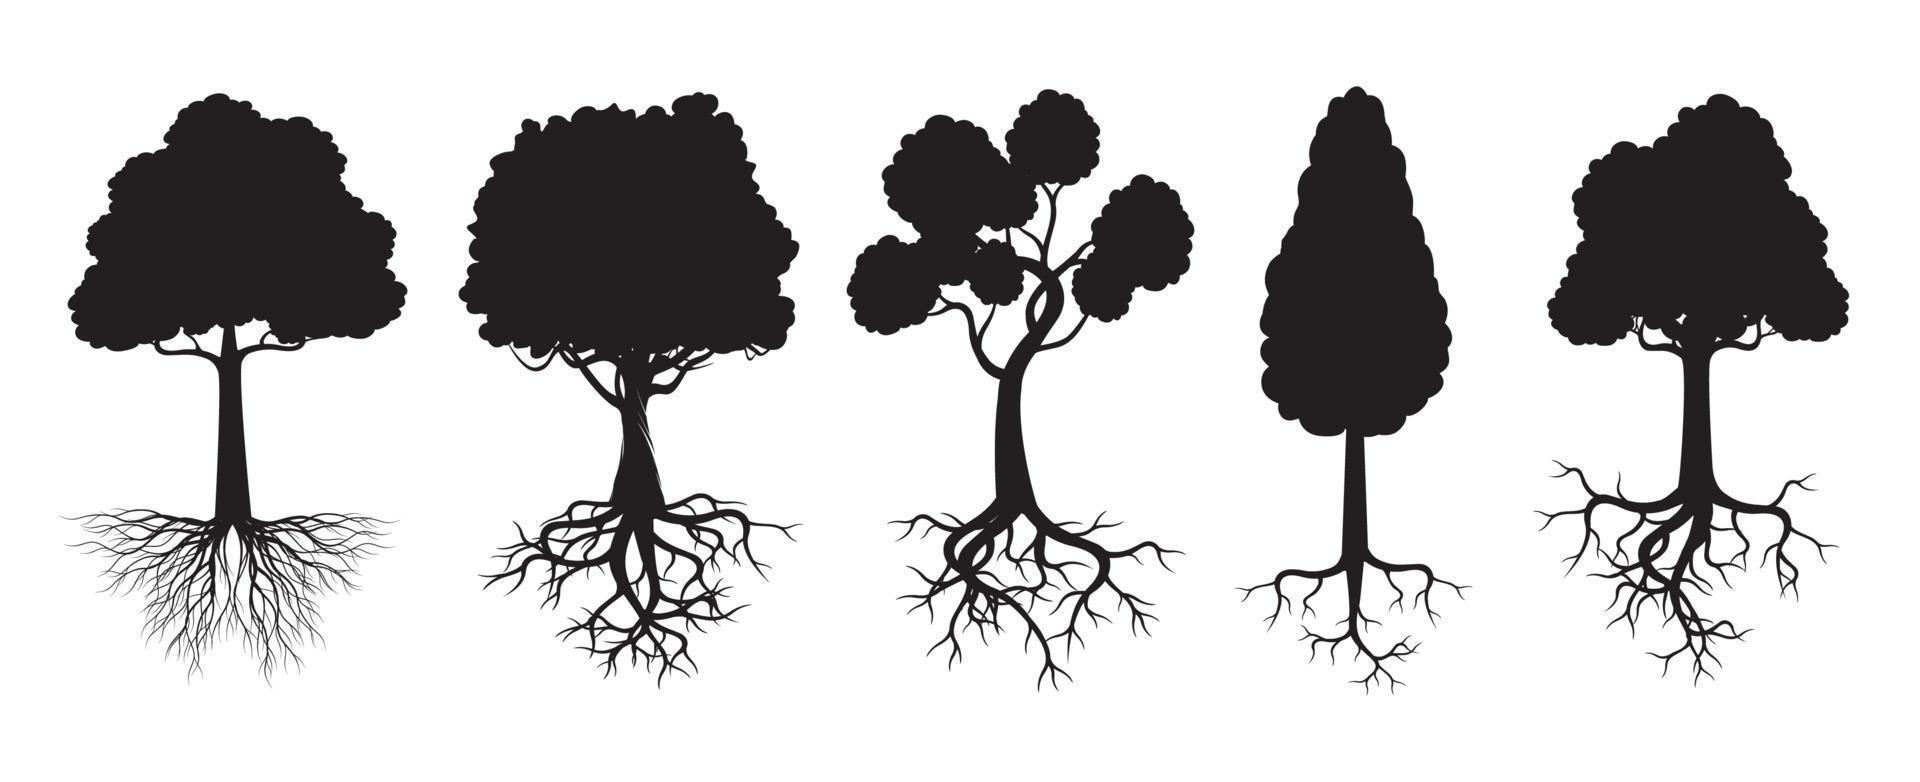 setze schwarze bäume mit wurzeln. Vektor-Illustration. vektor